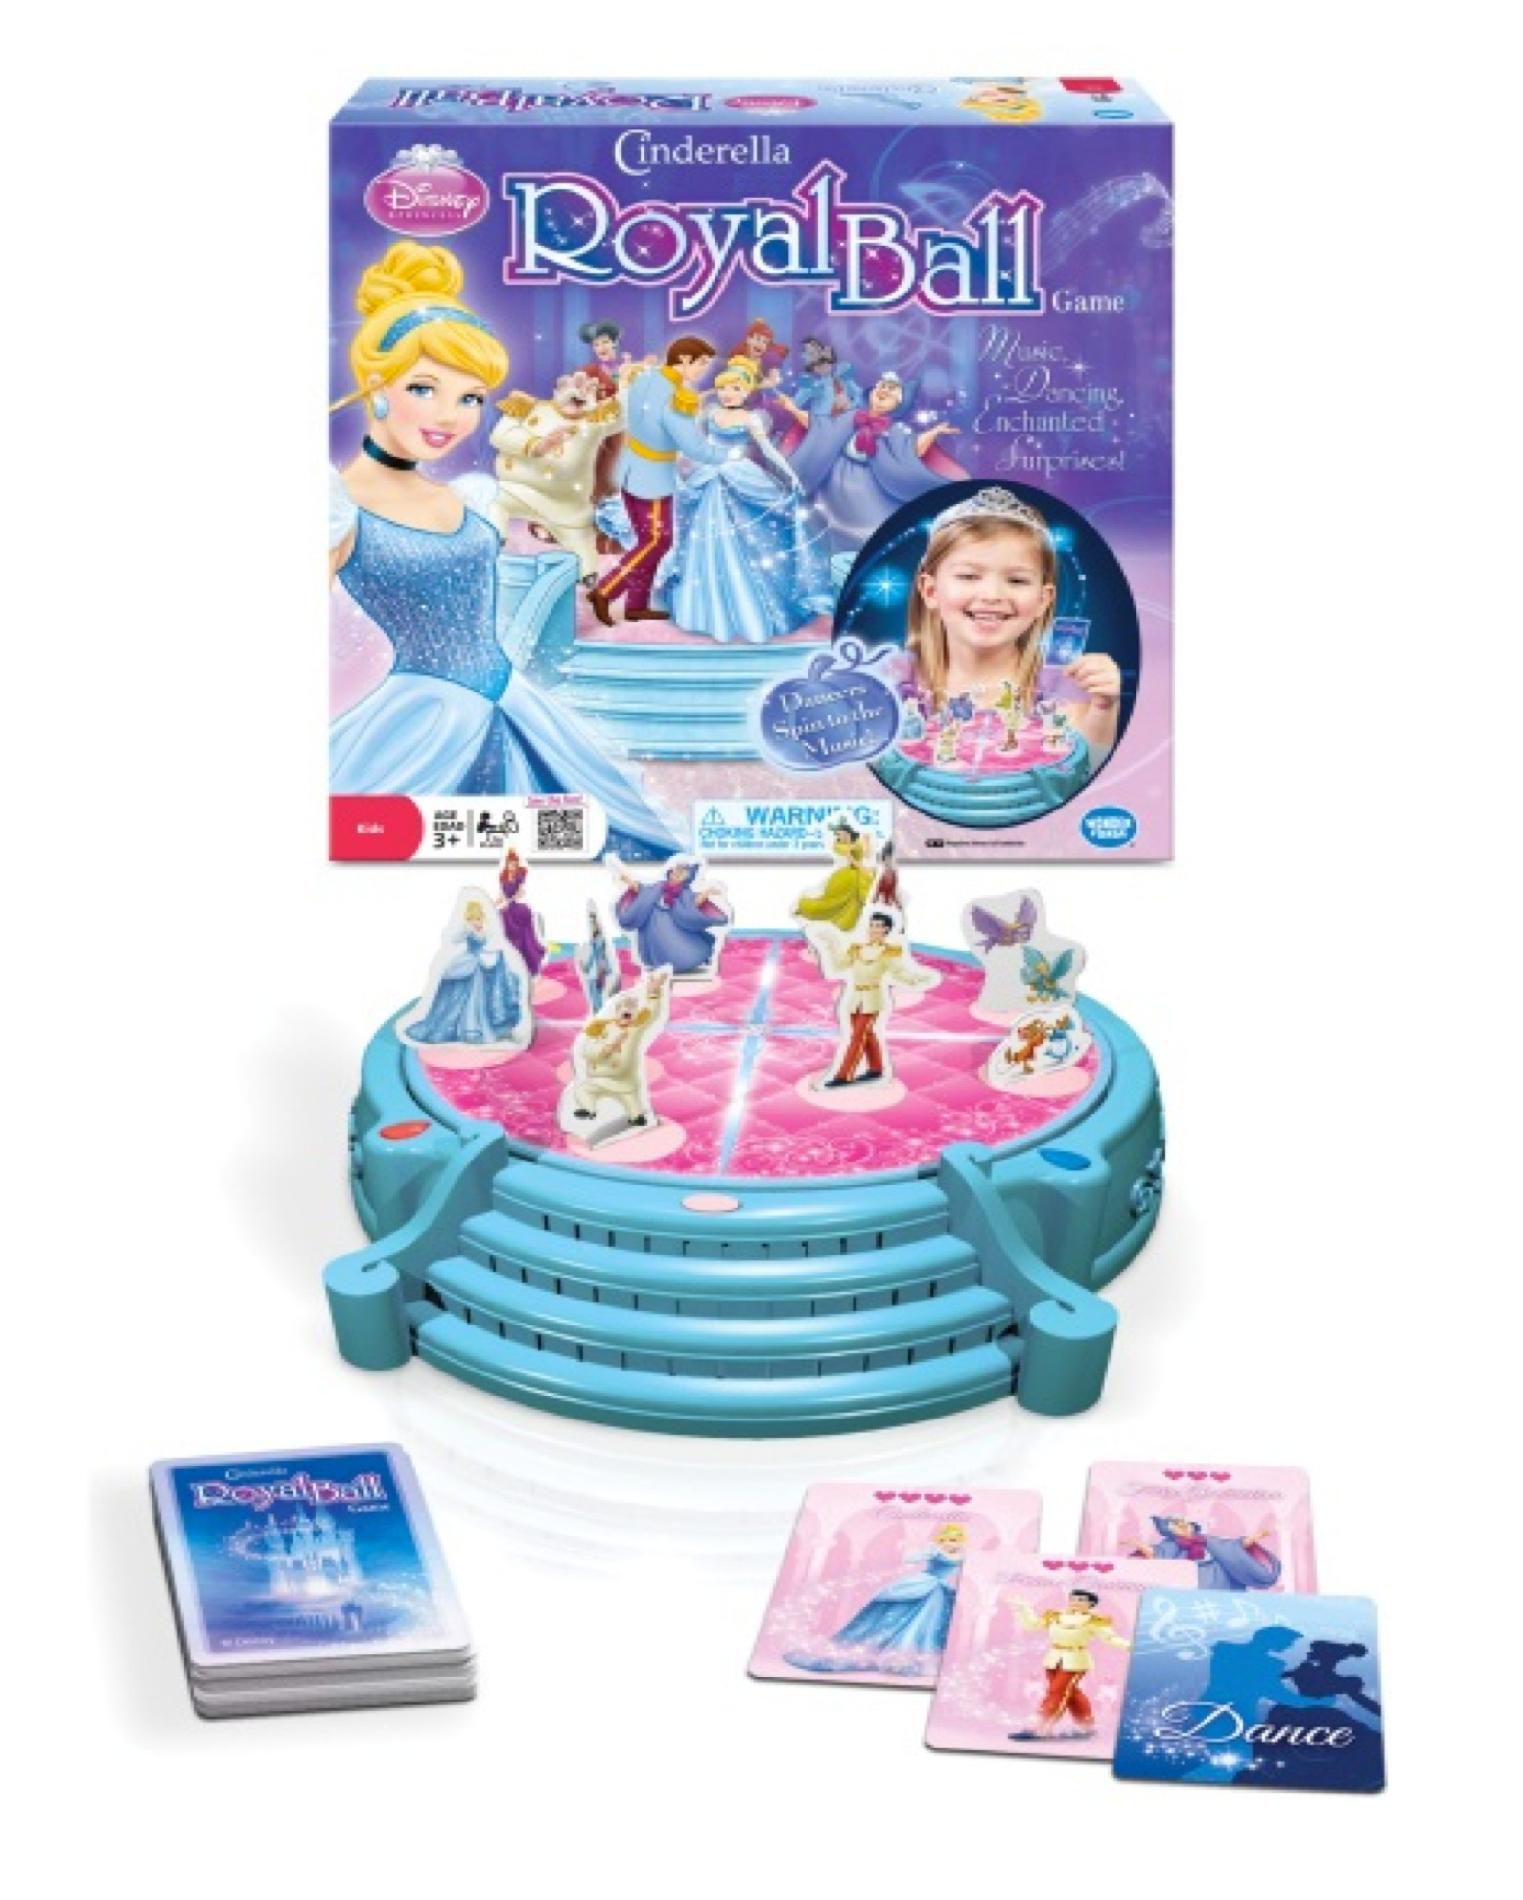 Disney Cinderella's Royal Ball Game